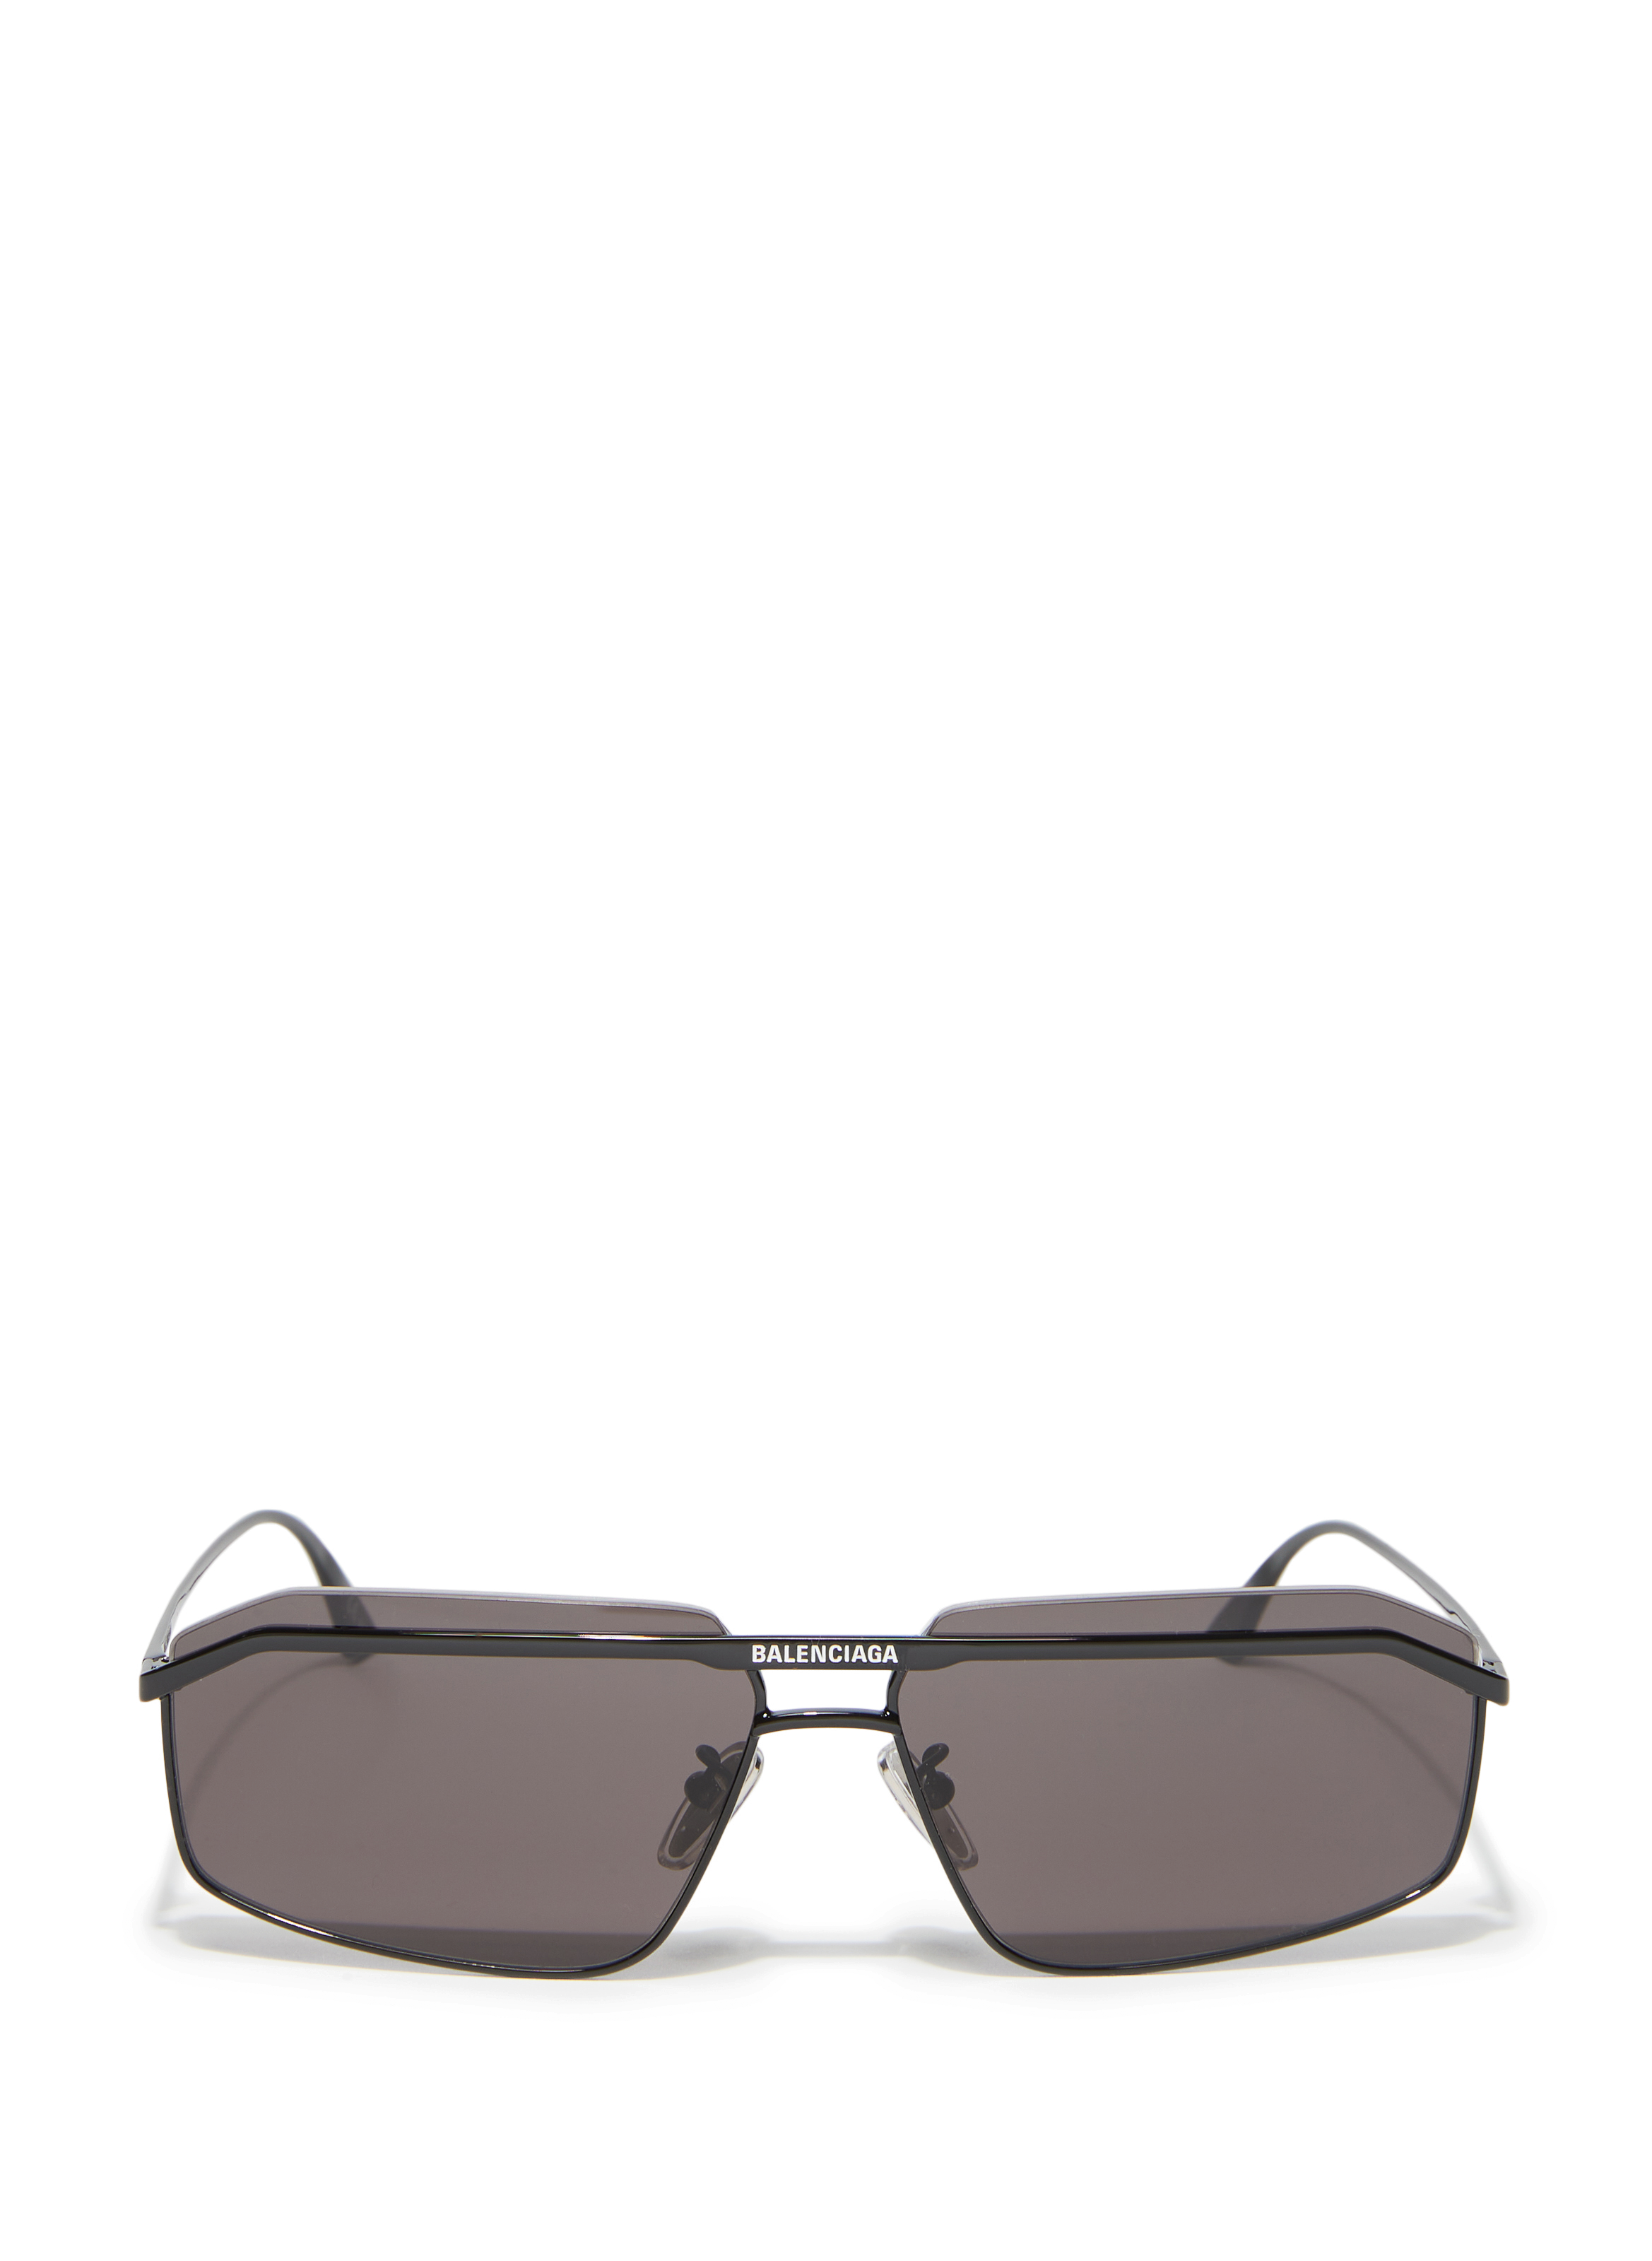 Balenciaga Launches The New LED Frame Sunglasses During Summer 20 Fashion  Show By Tony Bowles Contributing Columnist Medium   xn90absbknhbvgexnp1ai443